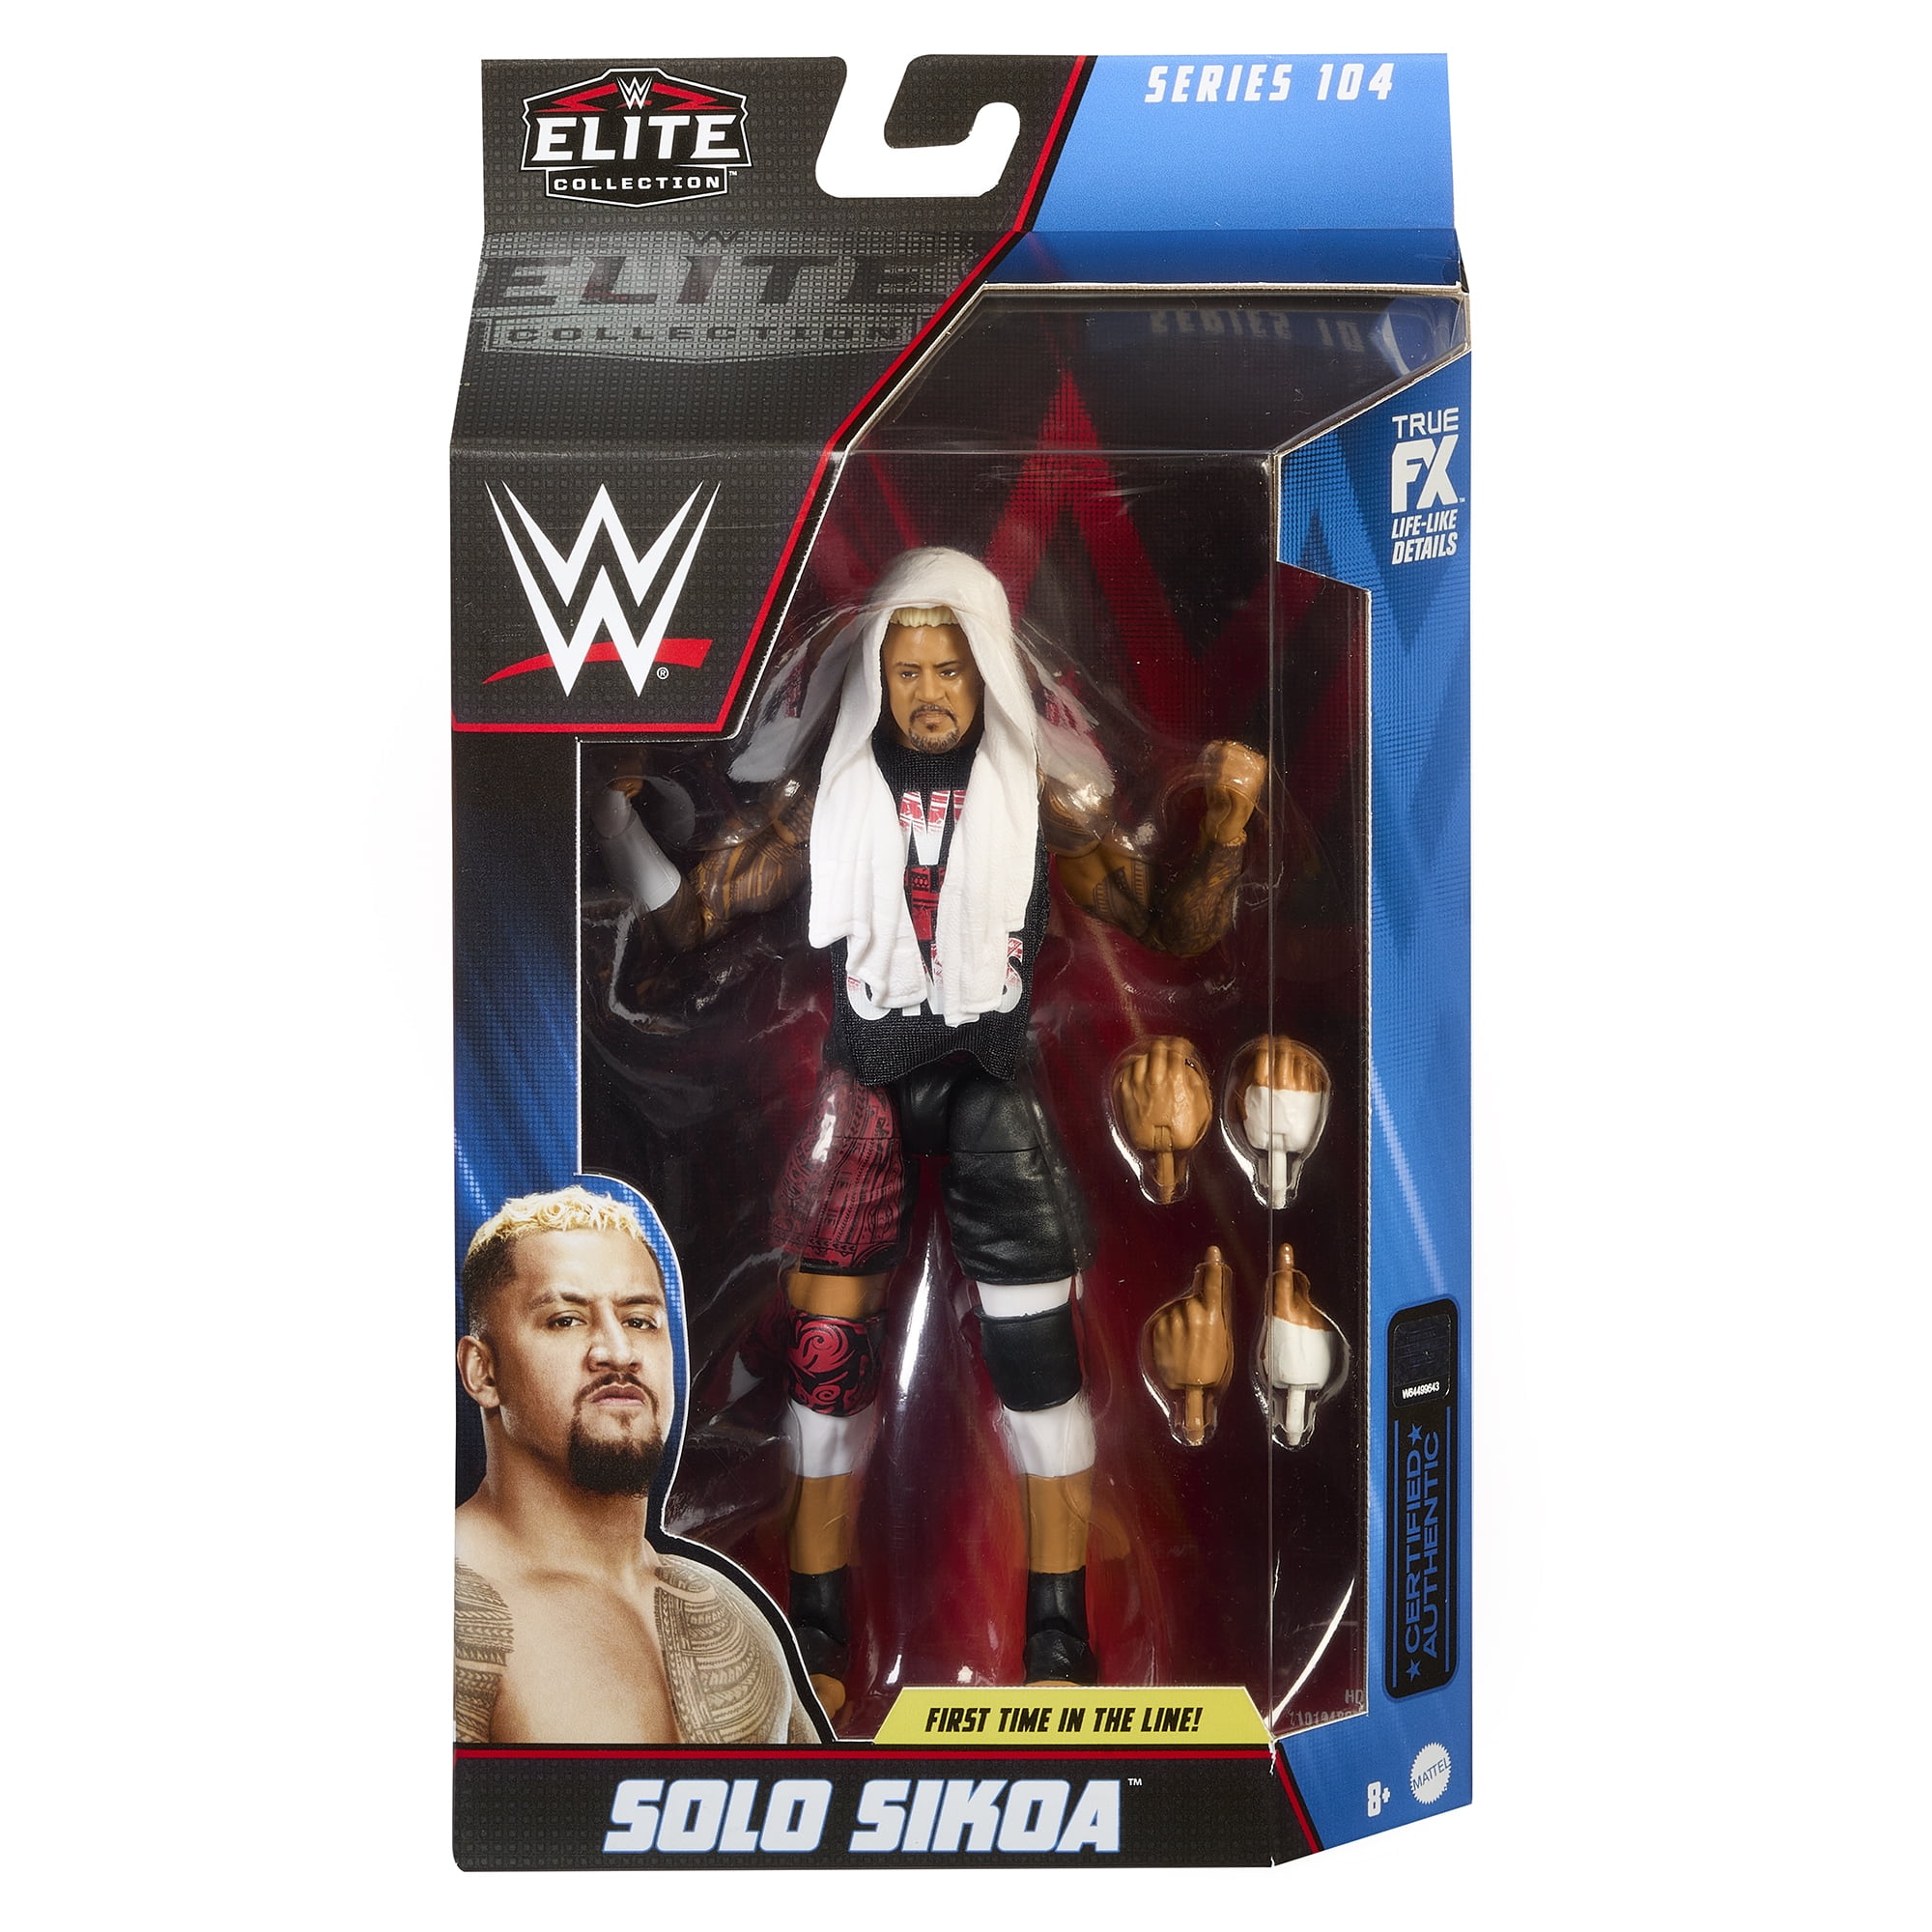 WWE Elite Collection Series 104 Solo Sikoa Action Figure - Retro